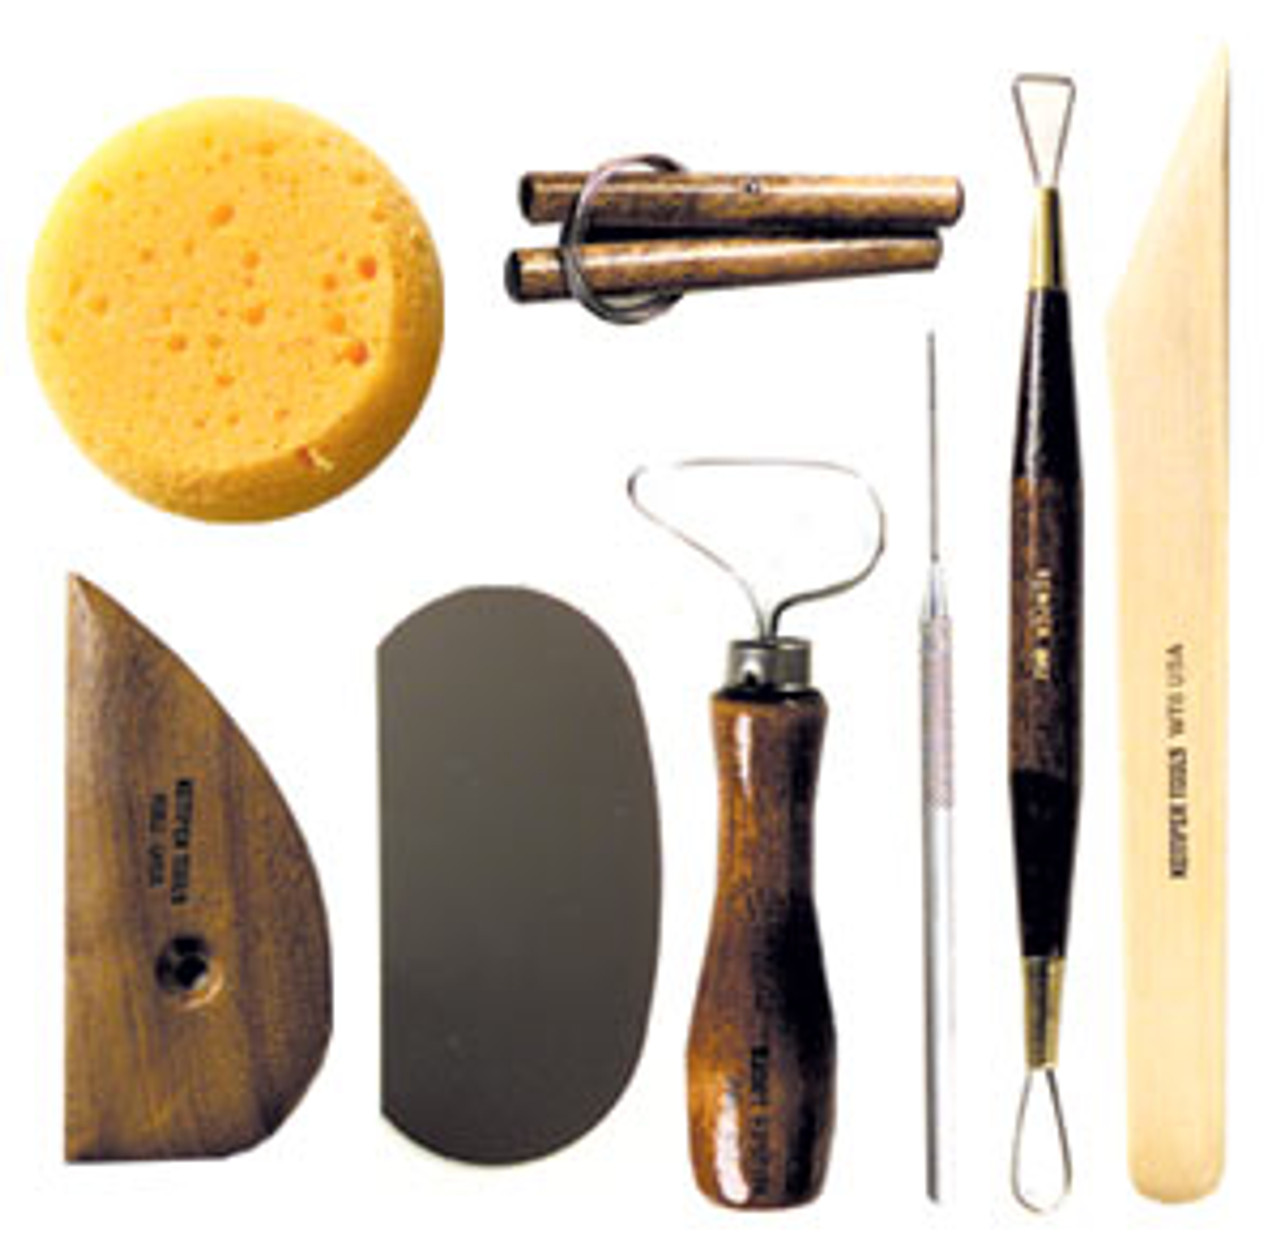 Kemper Pottery tool kit (9 tools) includes fettling knife